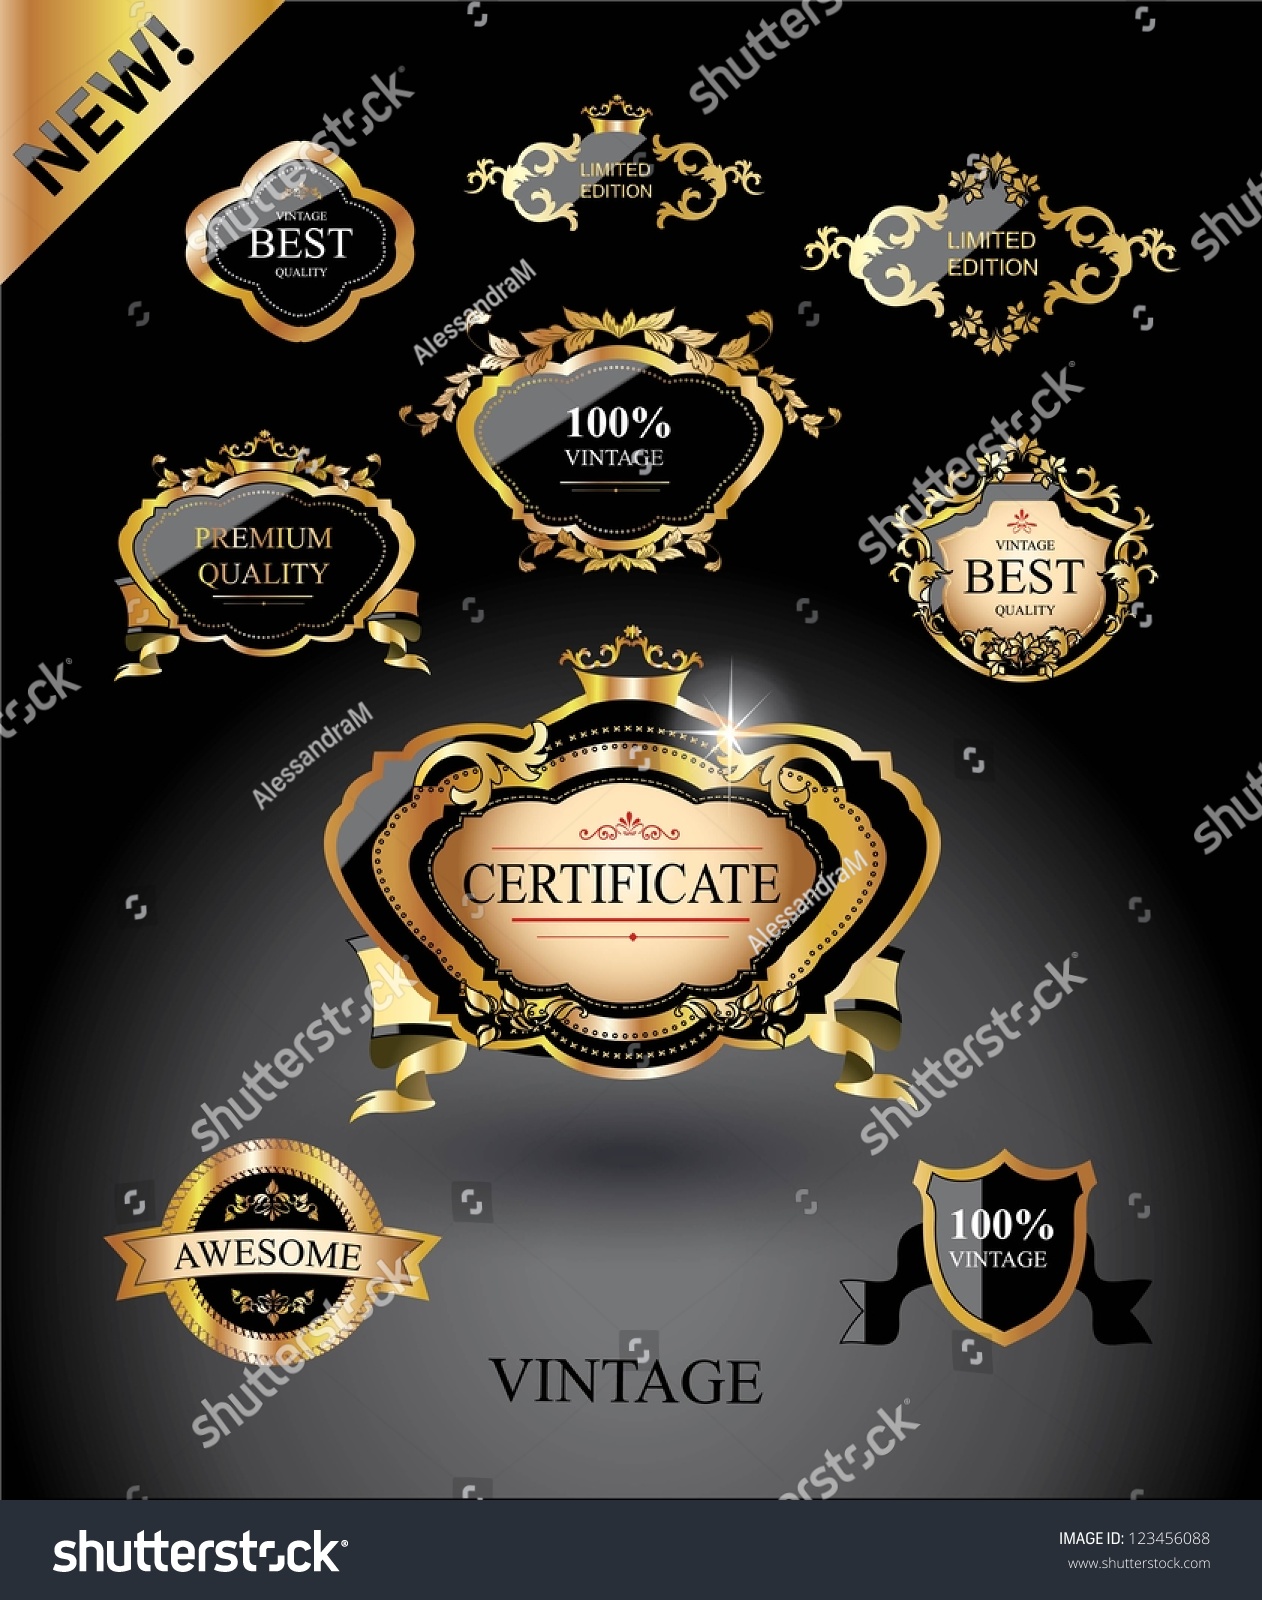 Vintage Labelsroyal Design Stock Vector (Royalty Free) 123456088 ...